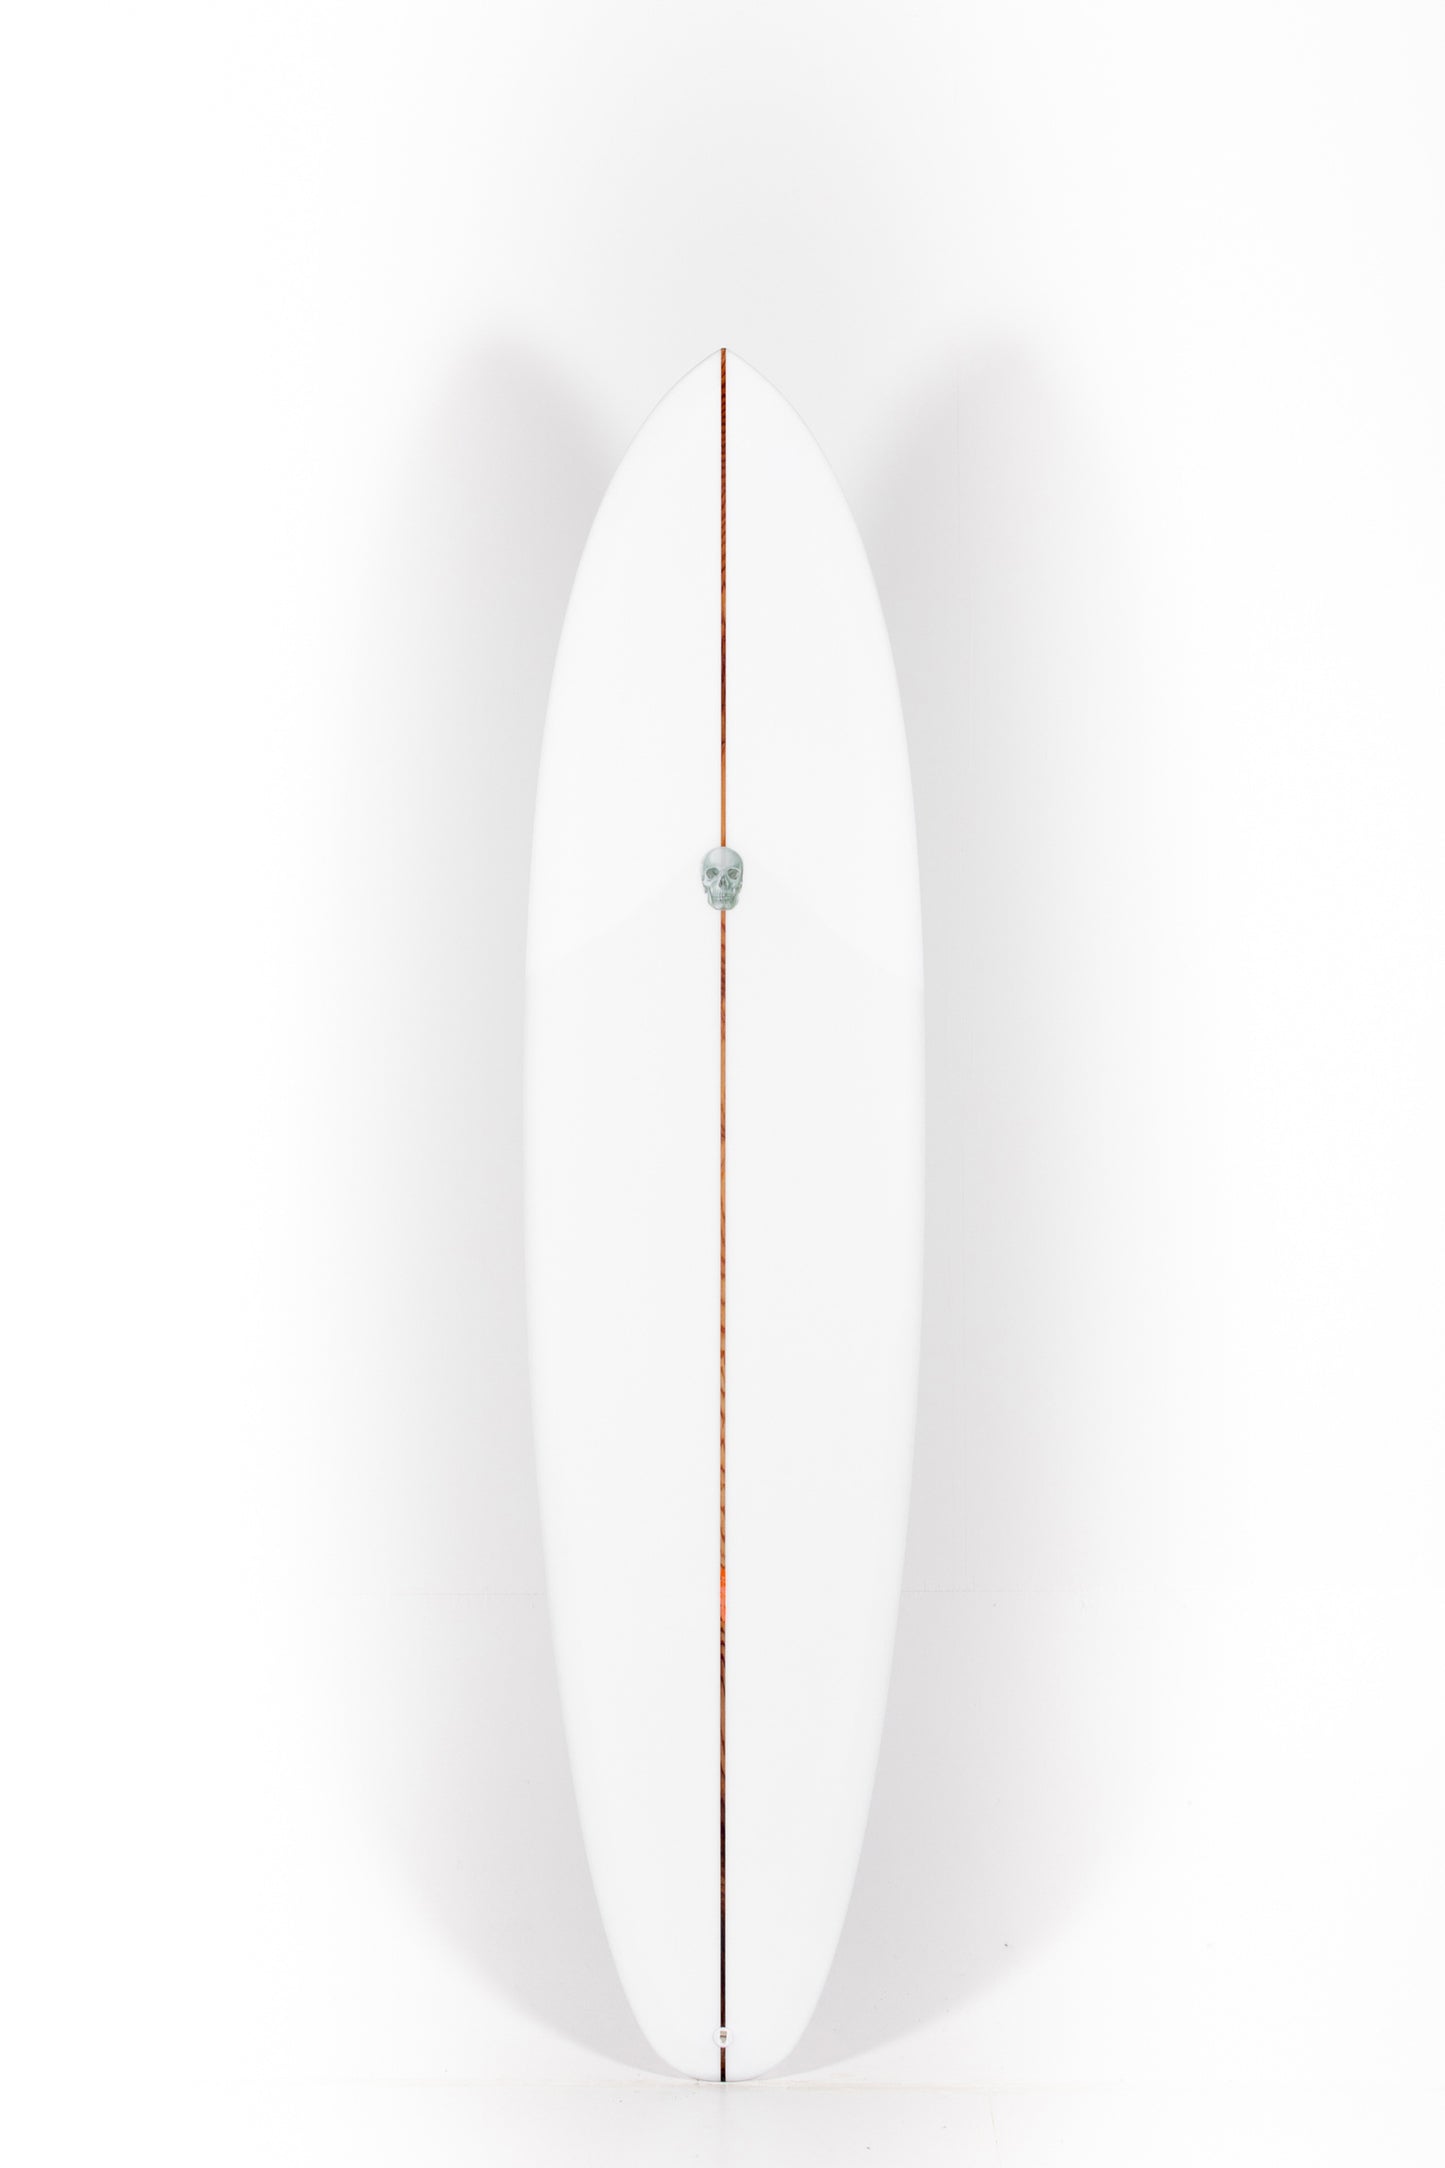 Pukas Surf Shop - Christenson Surfboards - TWIN TRACKER - 7'6" x 21 1/4  x 2 7/8 - CX03298